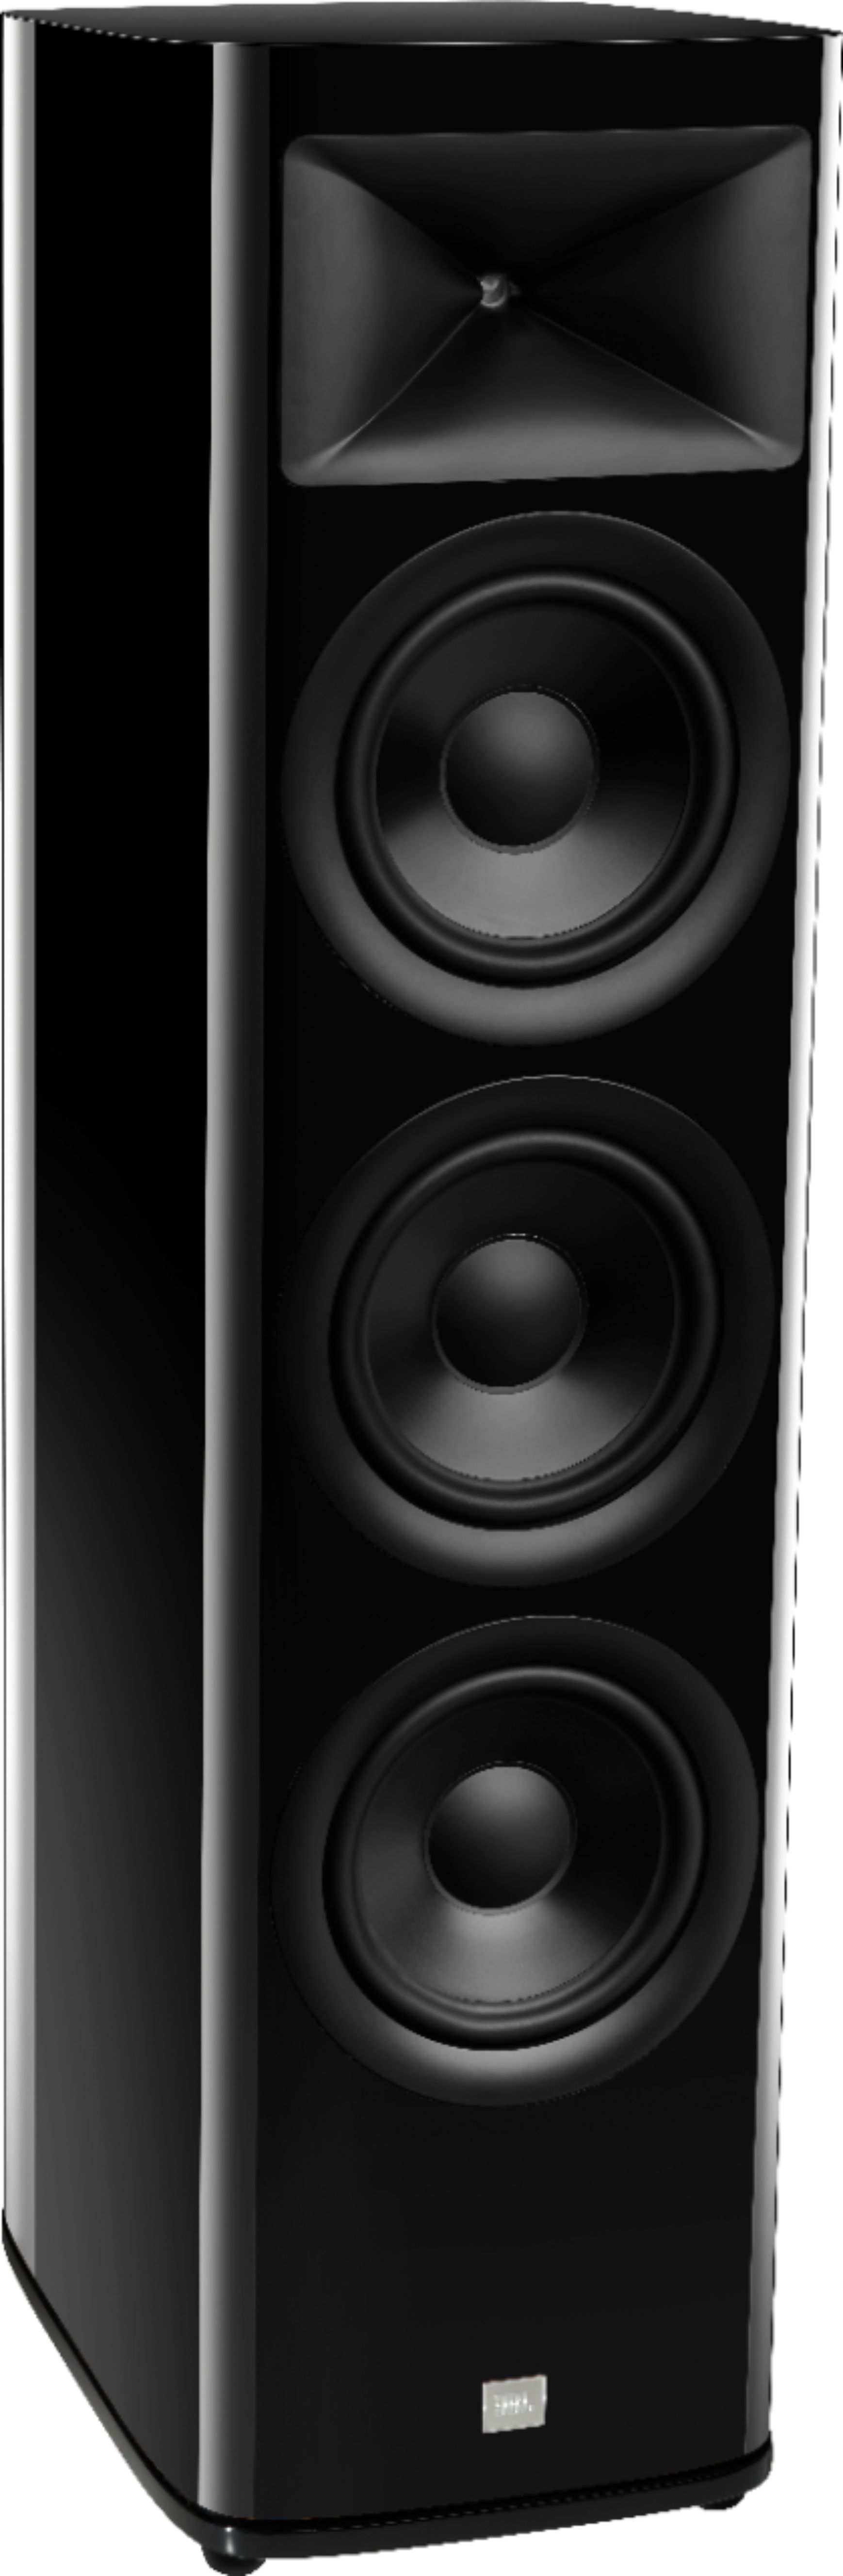 Left View: JBL - HDI3800 Triple 8-inch 2-1/2 way Floorstanding Loudspeaker with 1" compression tweeter - Gloss Black Finish